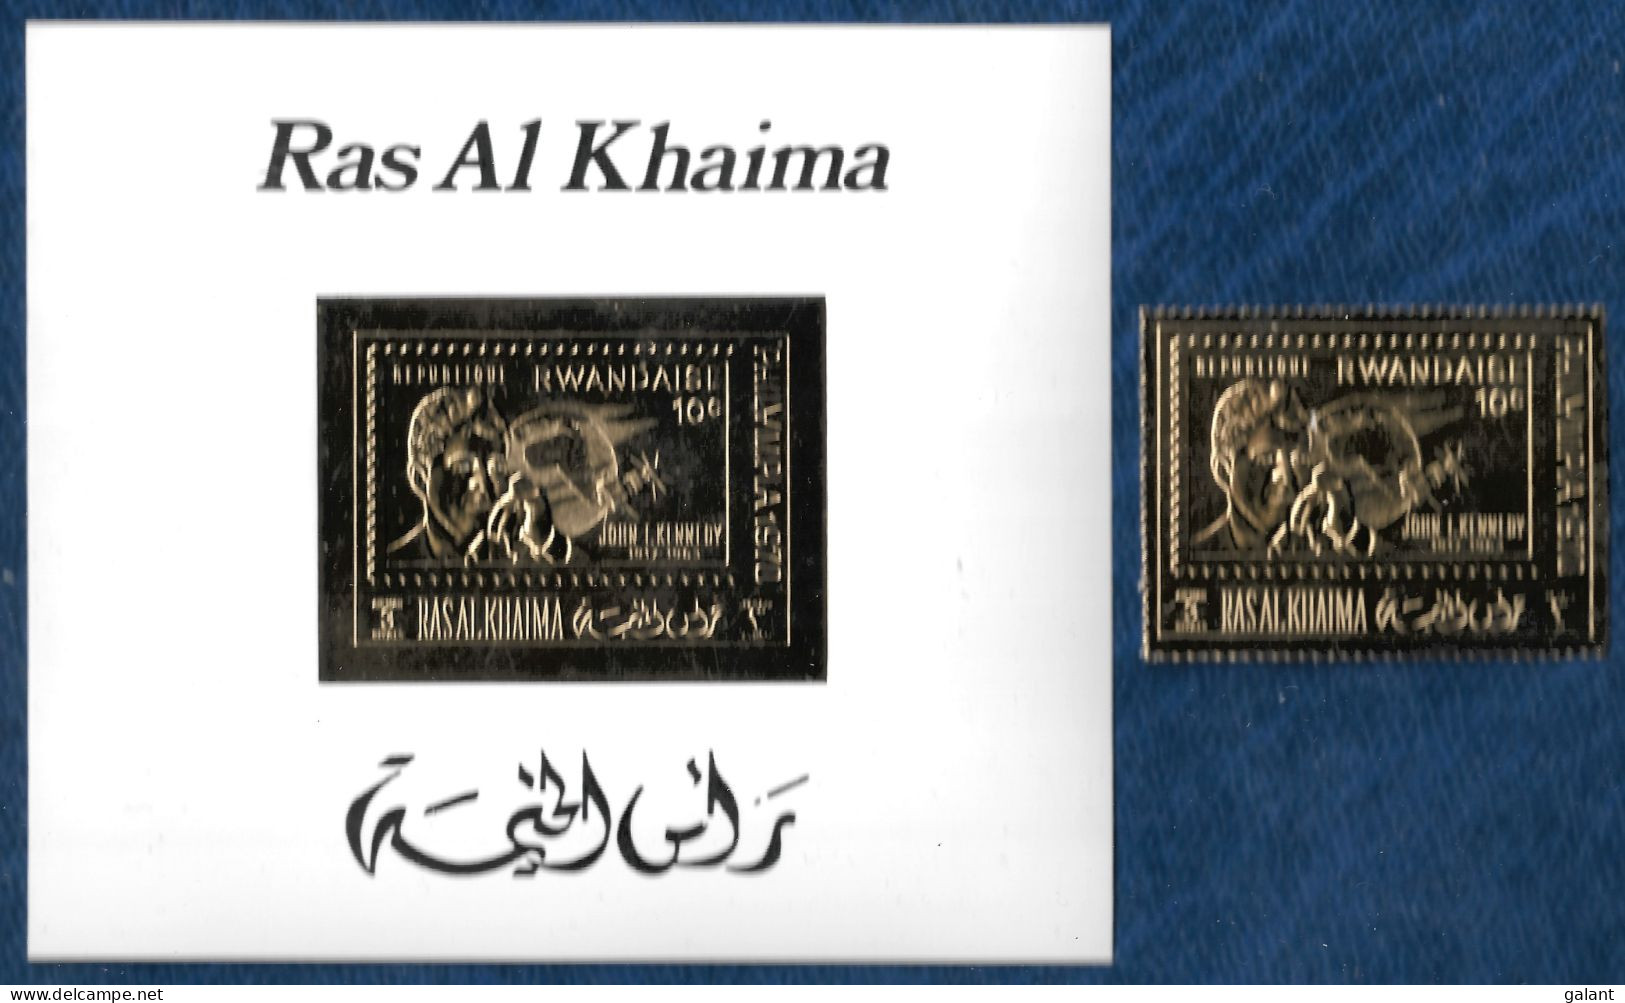 Ras Al Khaima 1970 Kennedy Phone Transit Satellite - Rwanda Philympia GOLD & SILVER IMPERF S/S + PERF Stamps MNH Rare - Asien